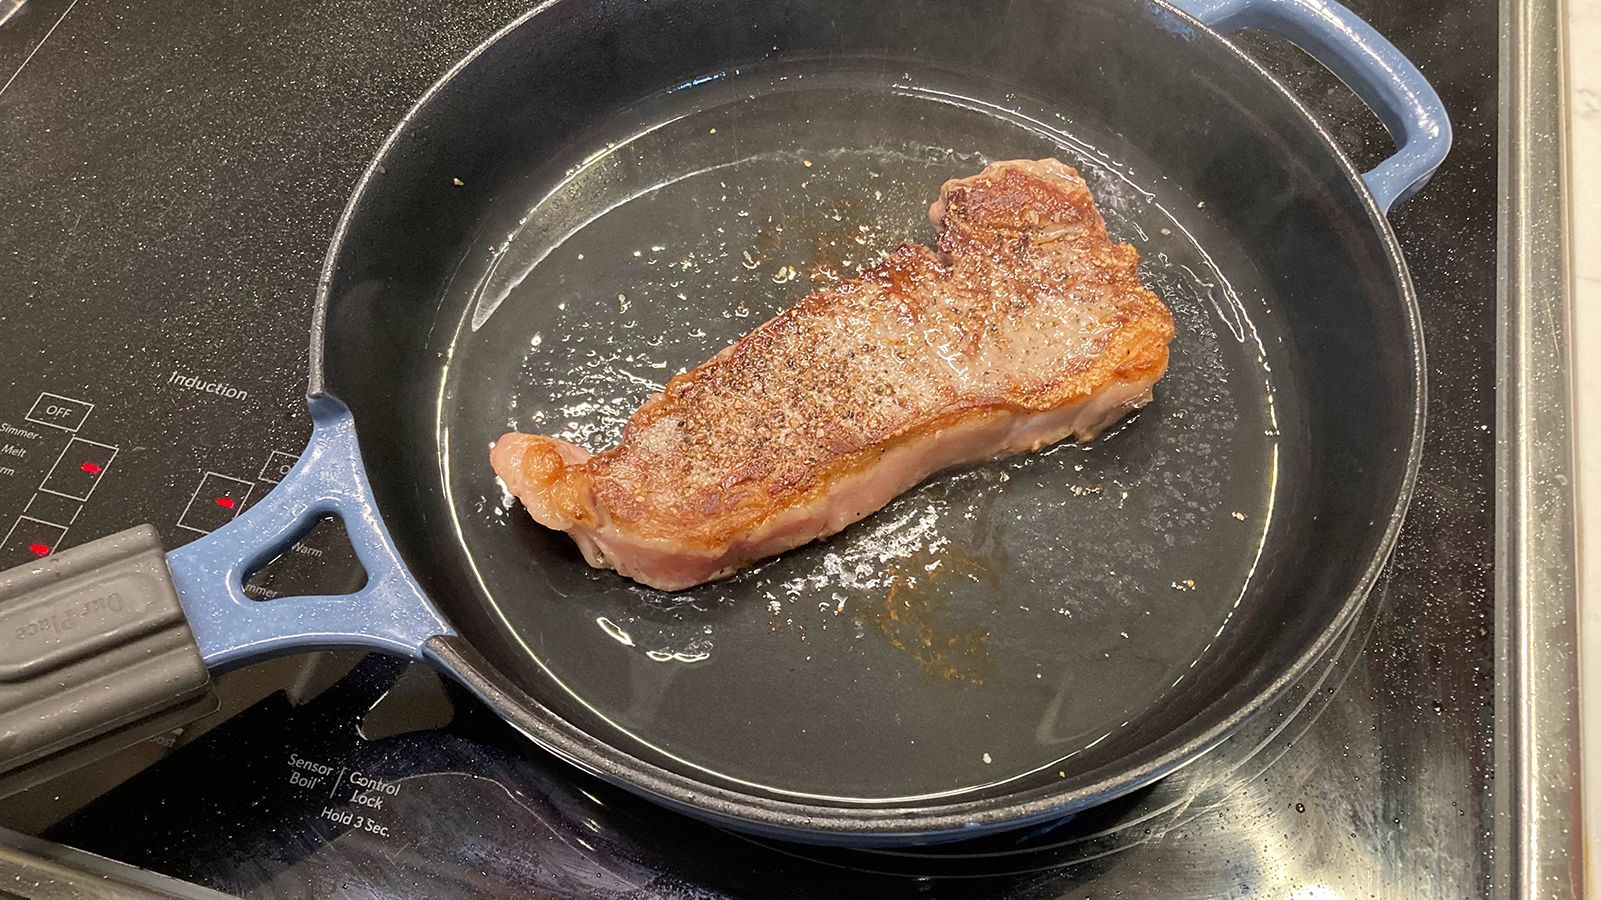 https://media.cnn.com/api/v1/images/stellar/prod/cast-iron-always-pan-review-steak.jpg?q=h_900,w_1601,x_0,y_0